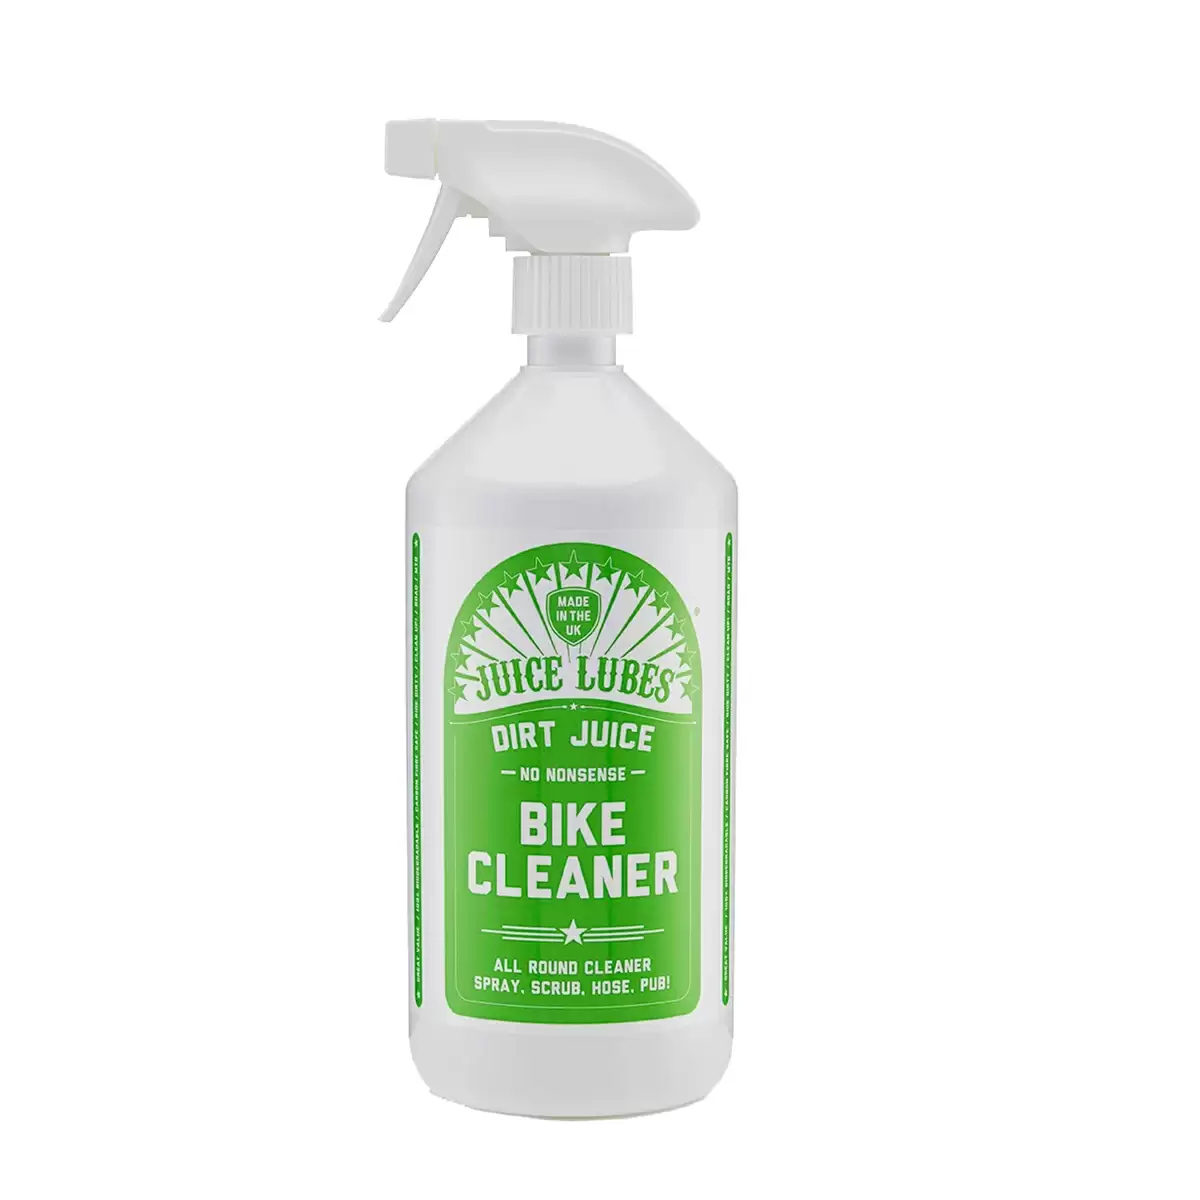 Detergente para limpeza de bicicletas 1lt - image